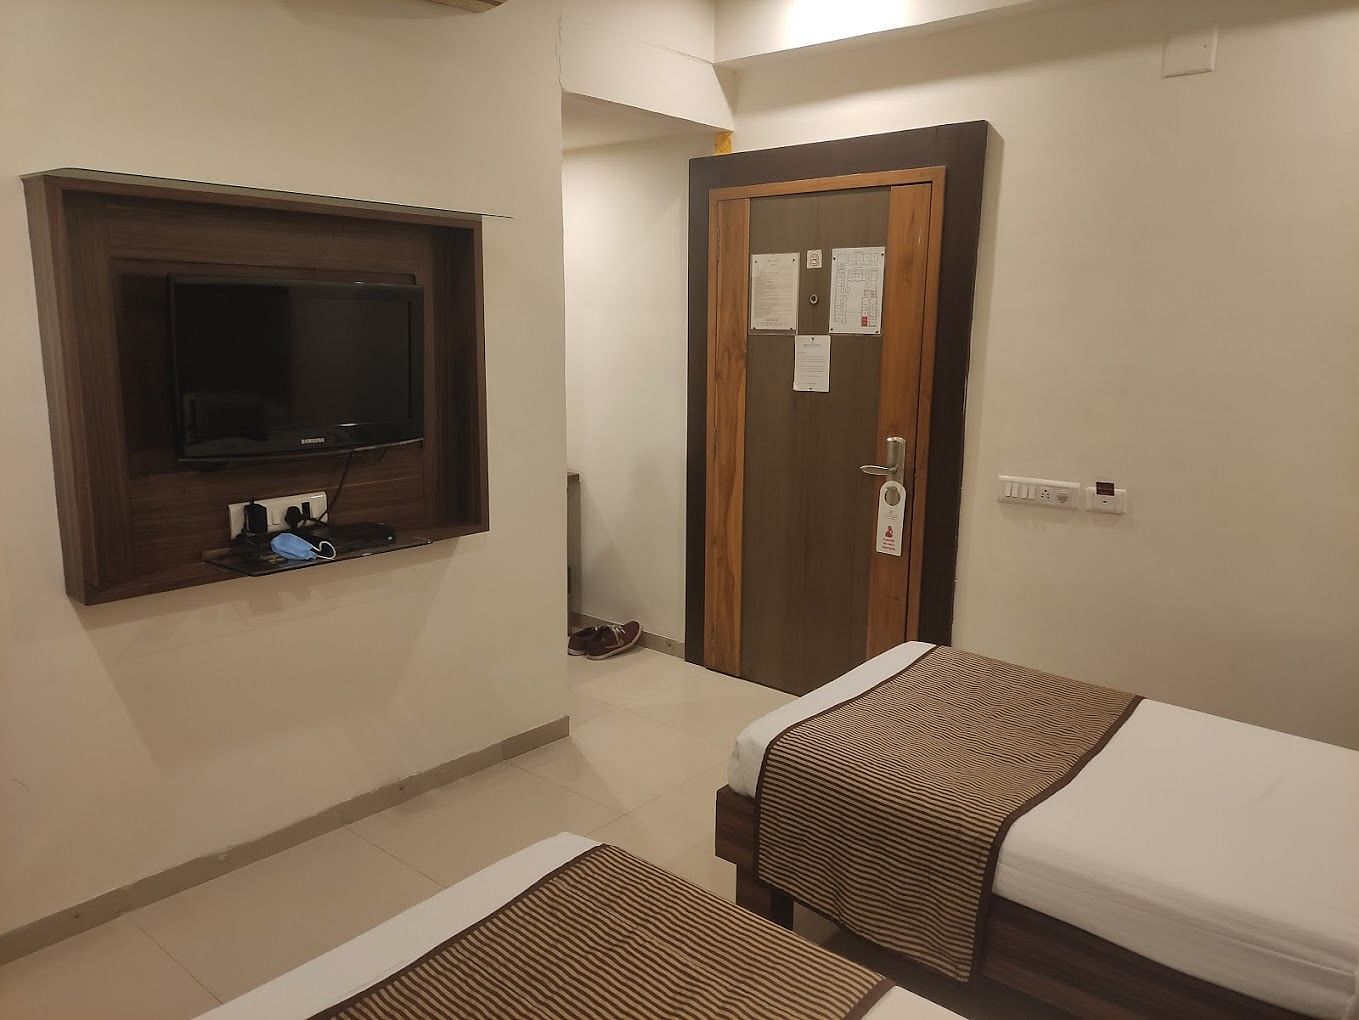 Treatotel Hotel in Memnagar, Ahmedabad